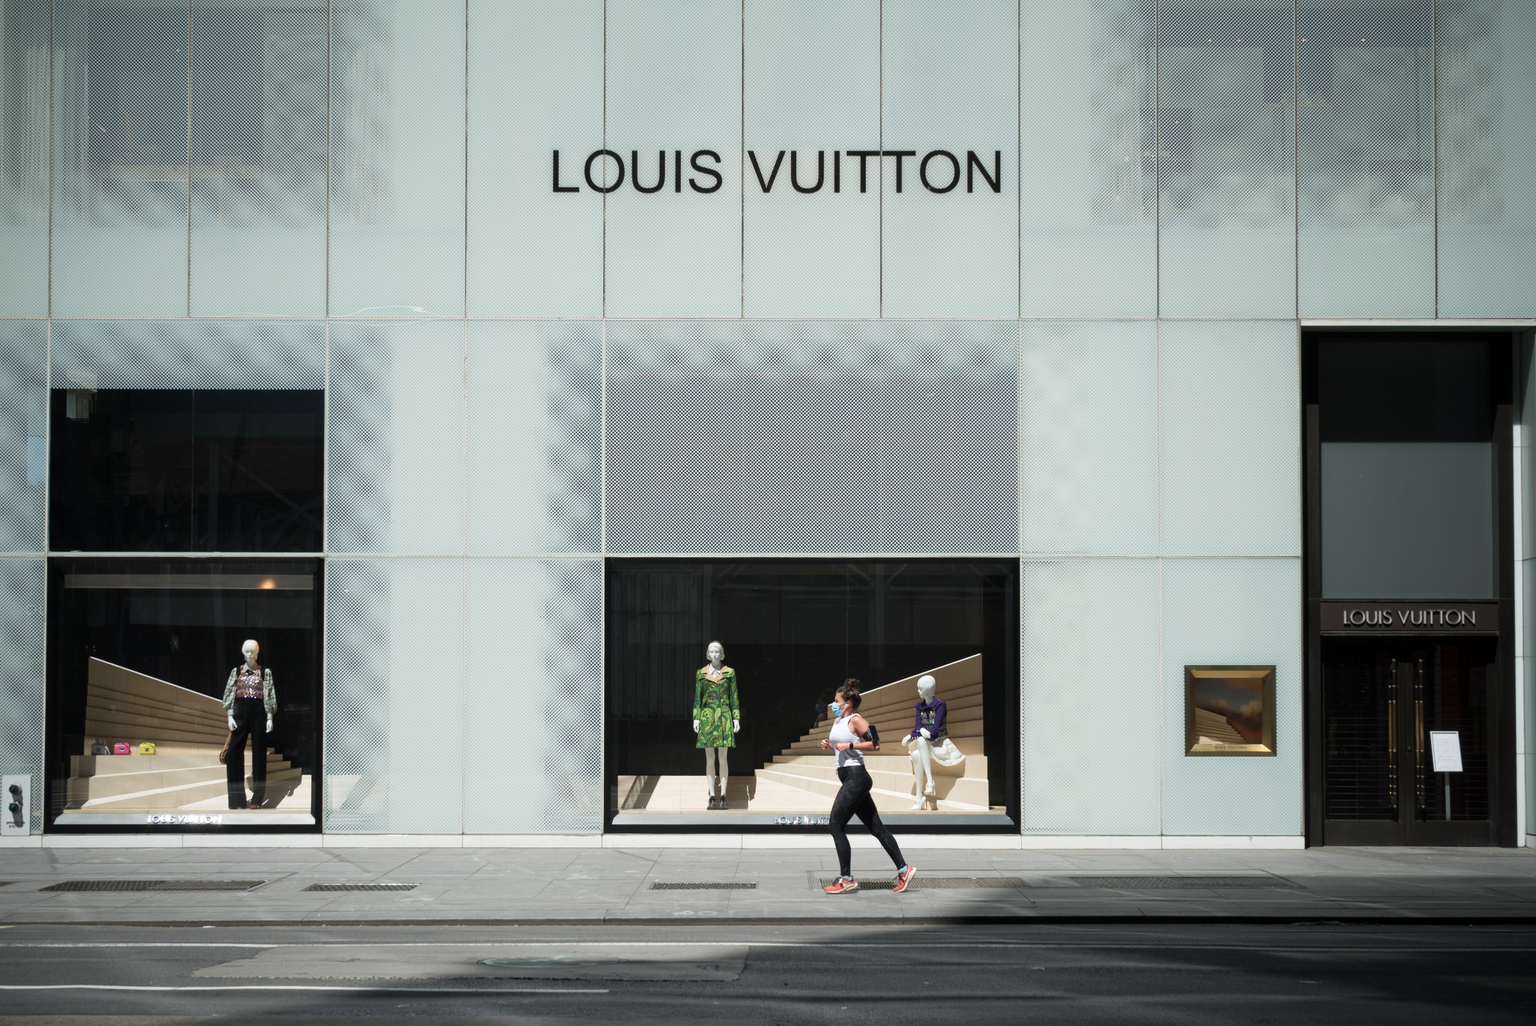 LVMH Moët Hennessy - Louis Vuitton, Société Européenne Stock Price, News &  Analysis (OTCMKTS:LVMUY)